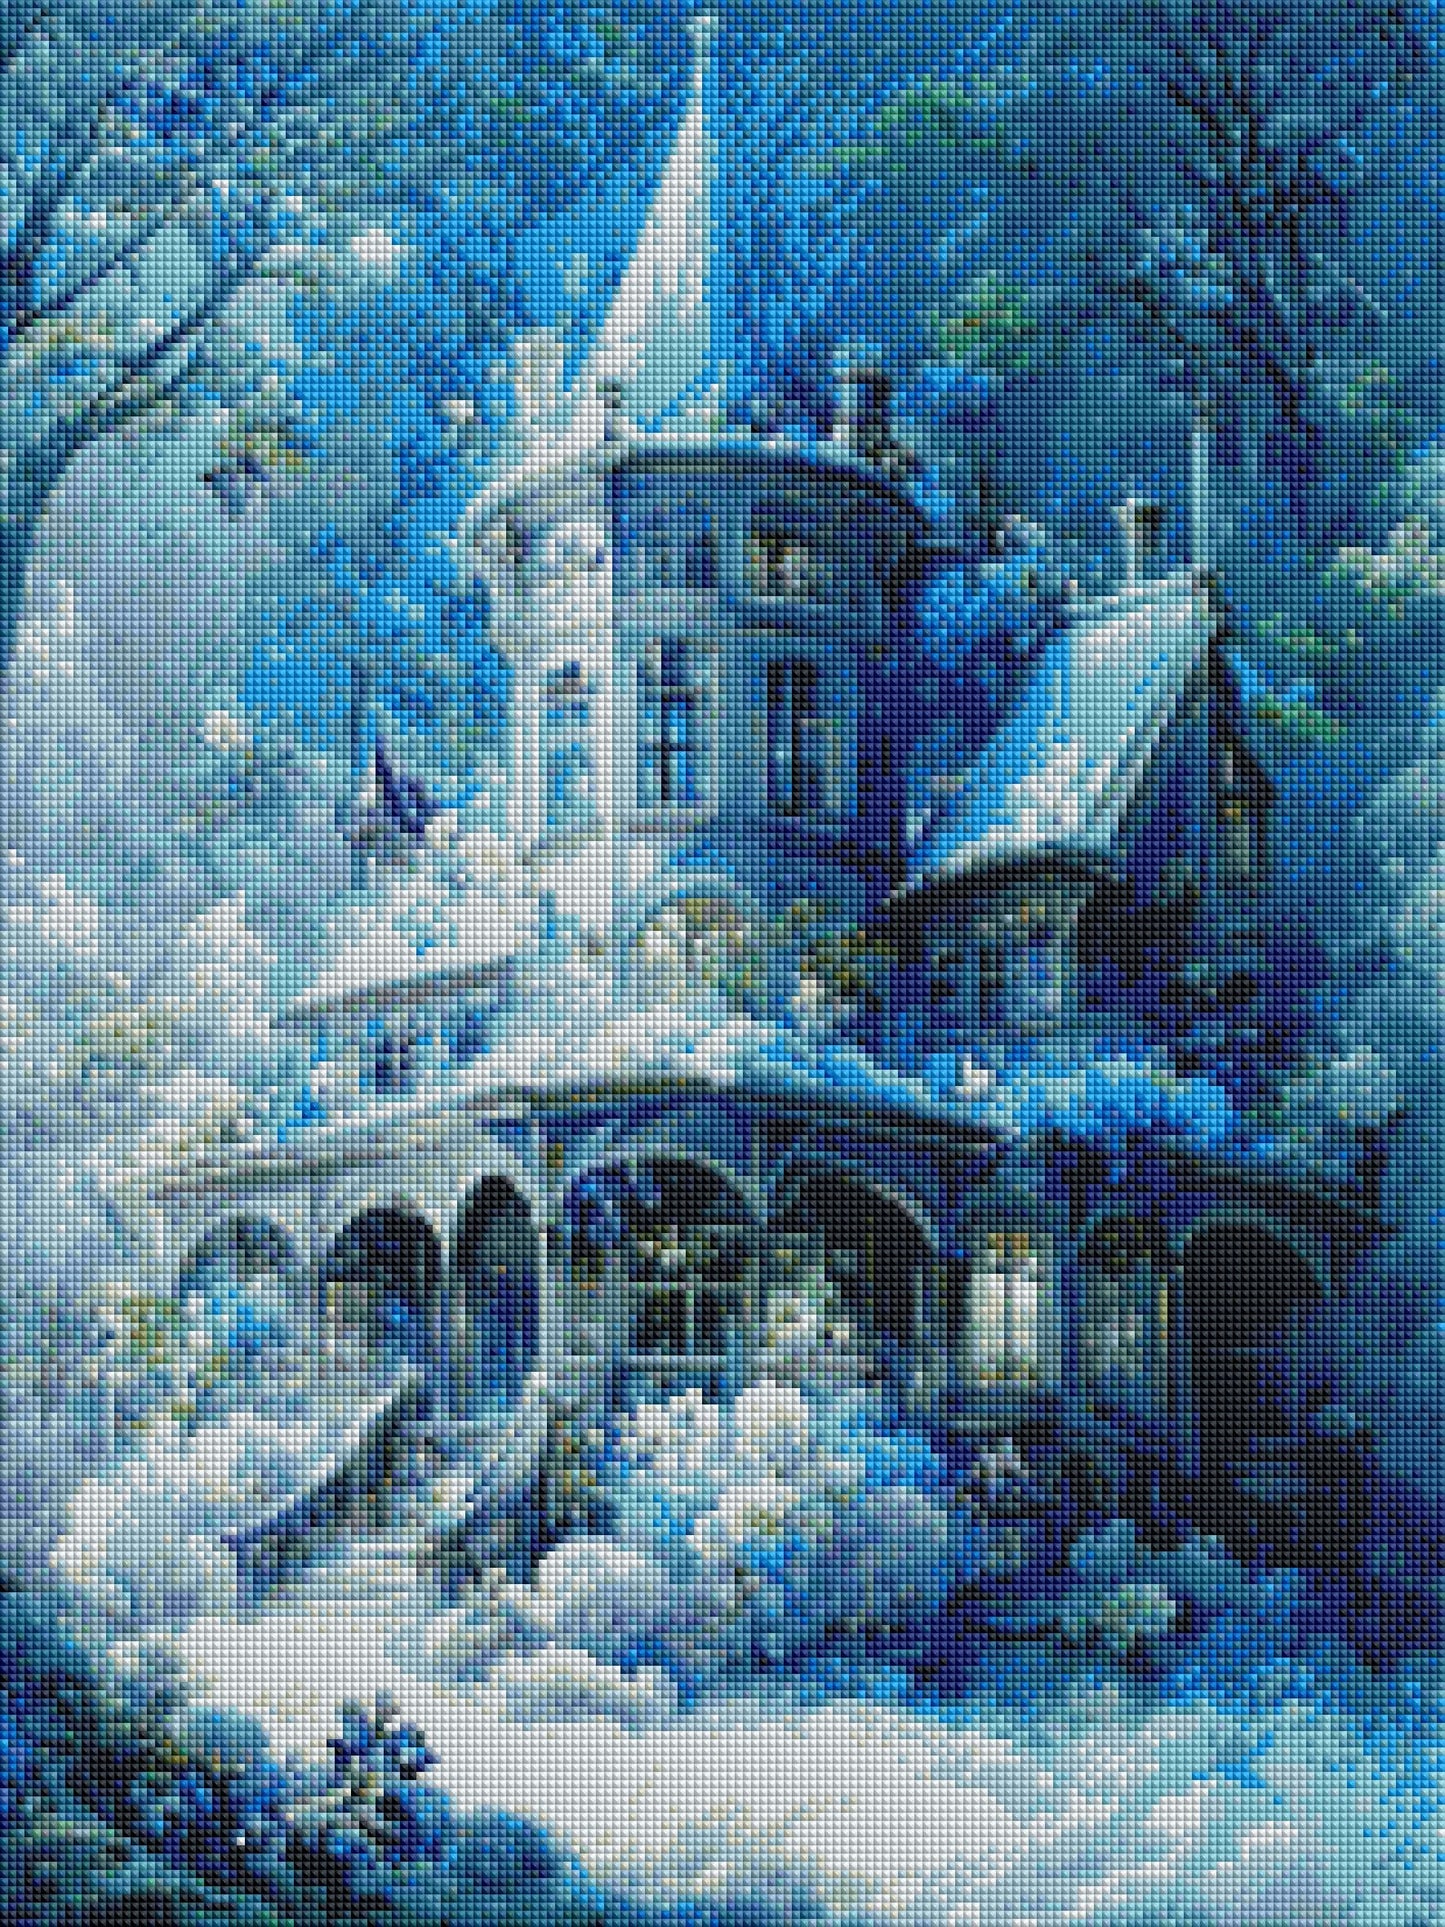 Diamond Painting - Dream Castle